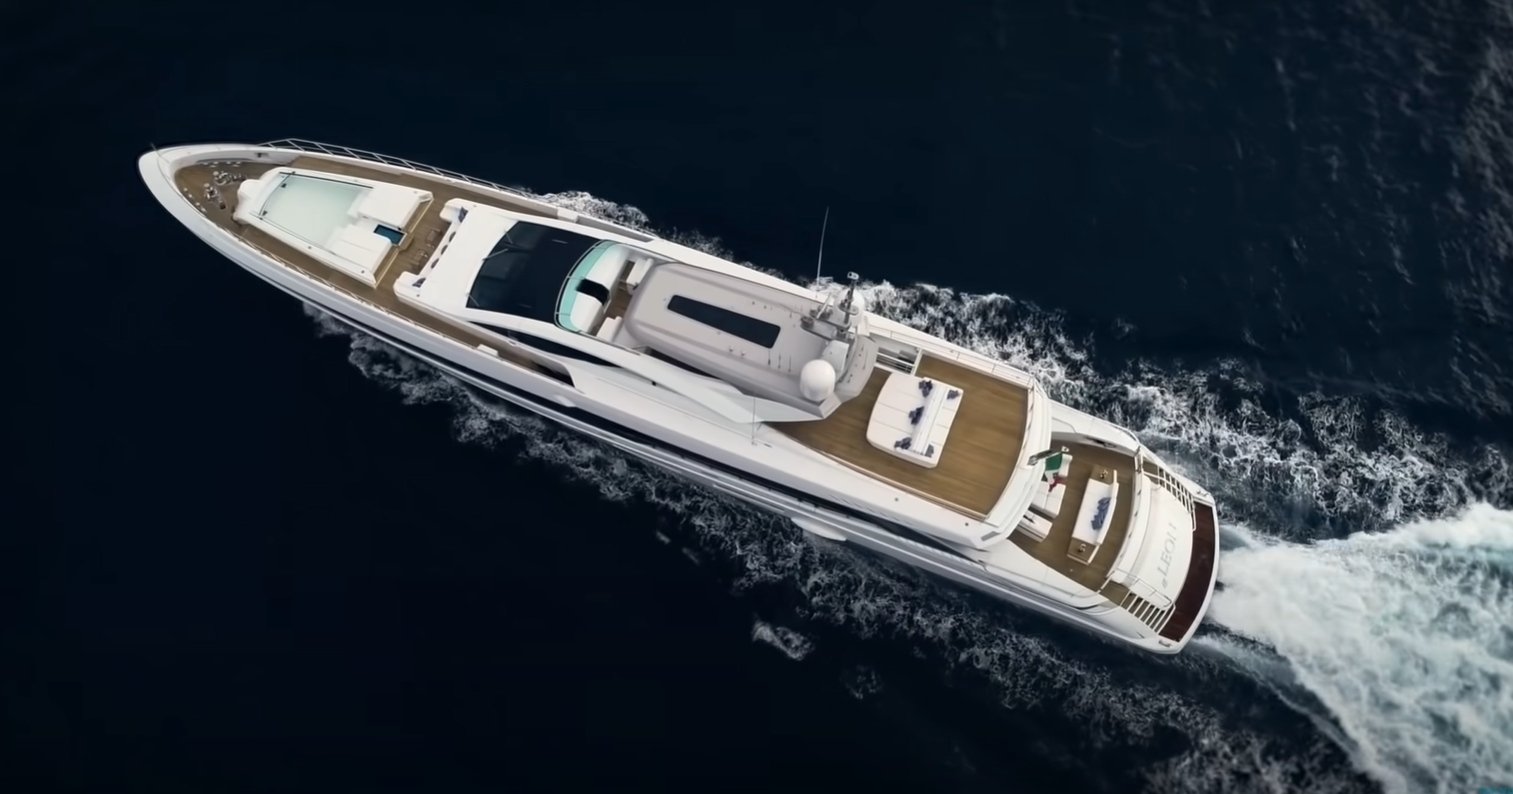 EL LEON Yacht • Overmarine • 2018 • Propriétaire Massimo Zanetti 